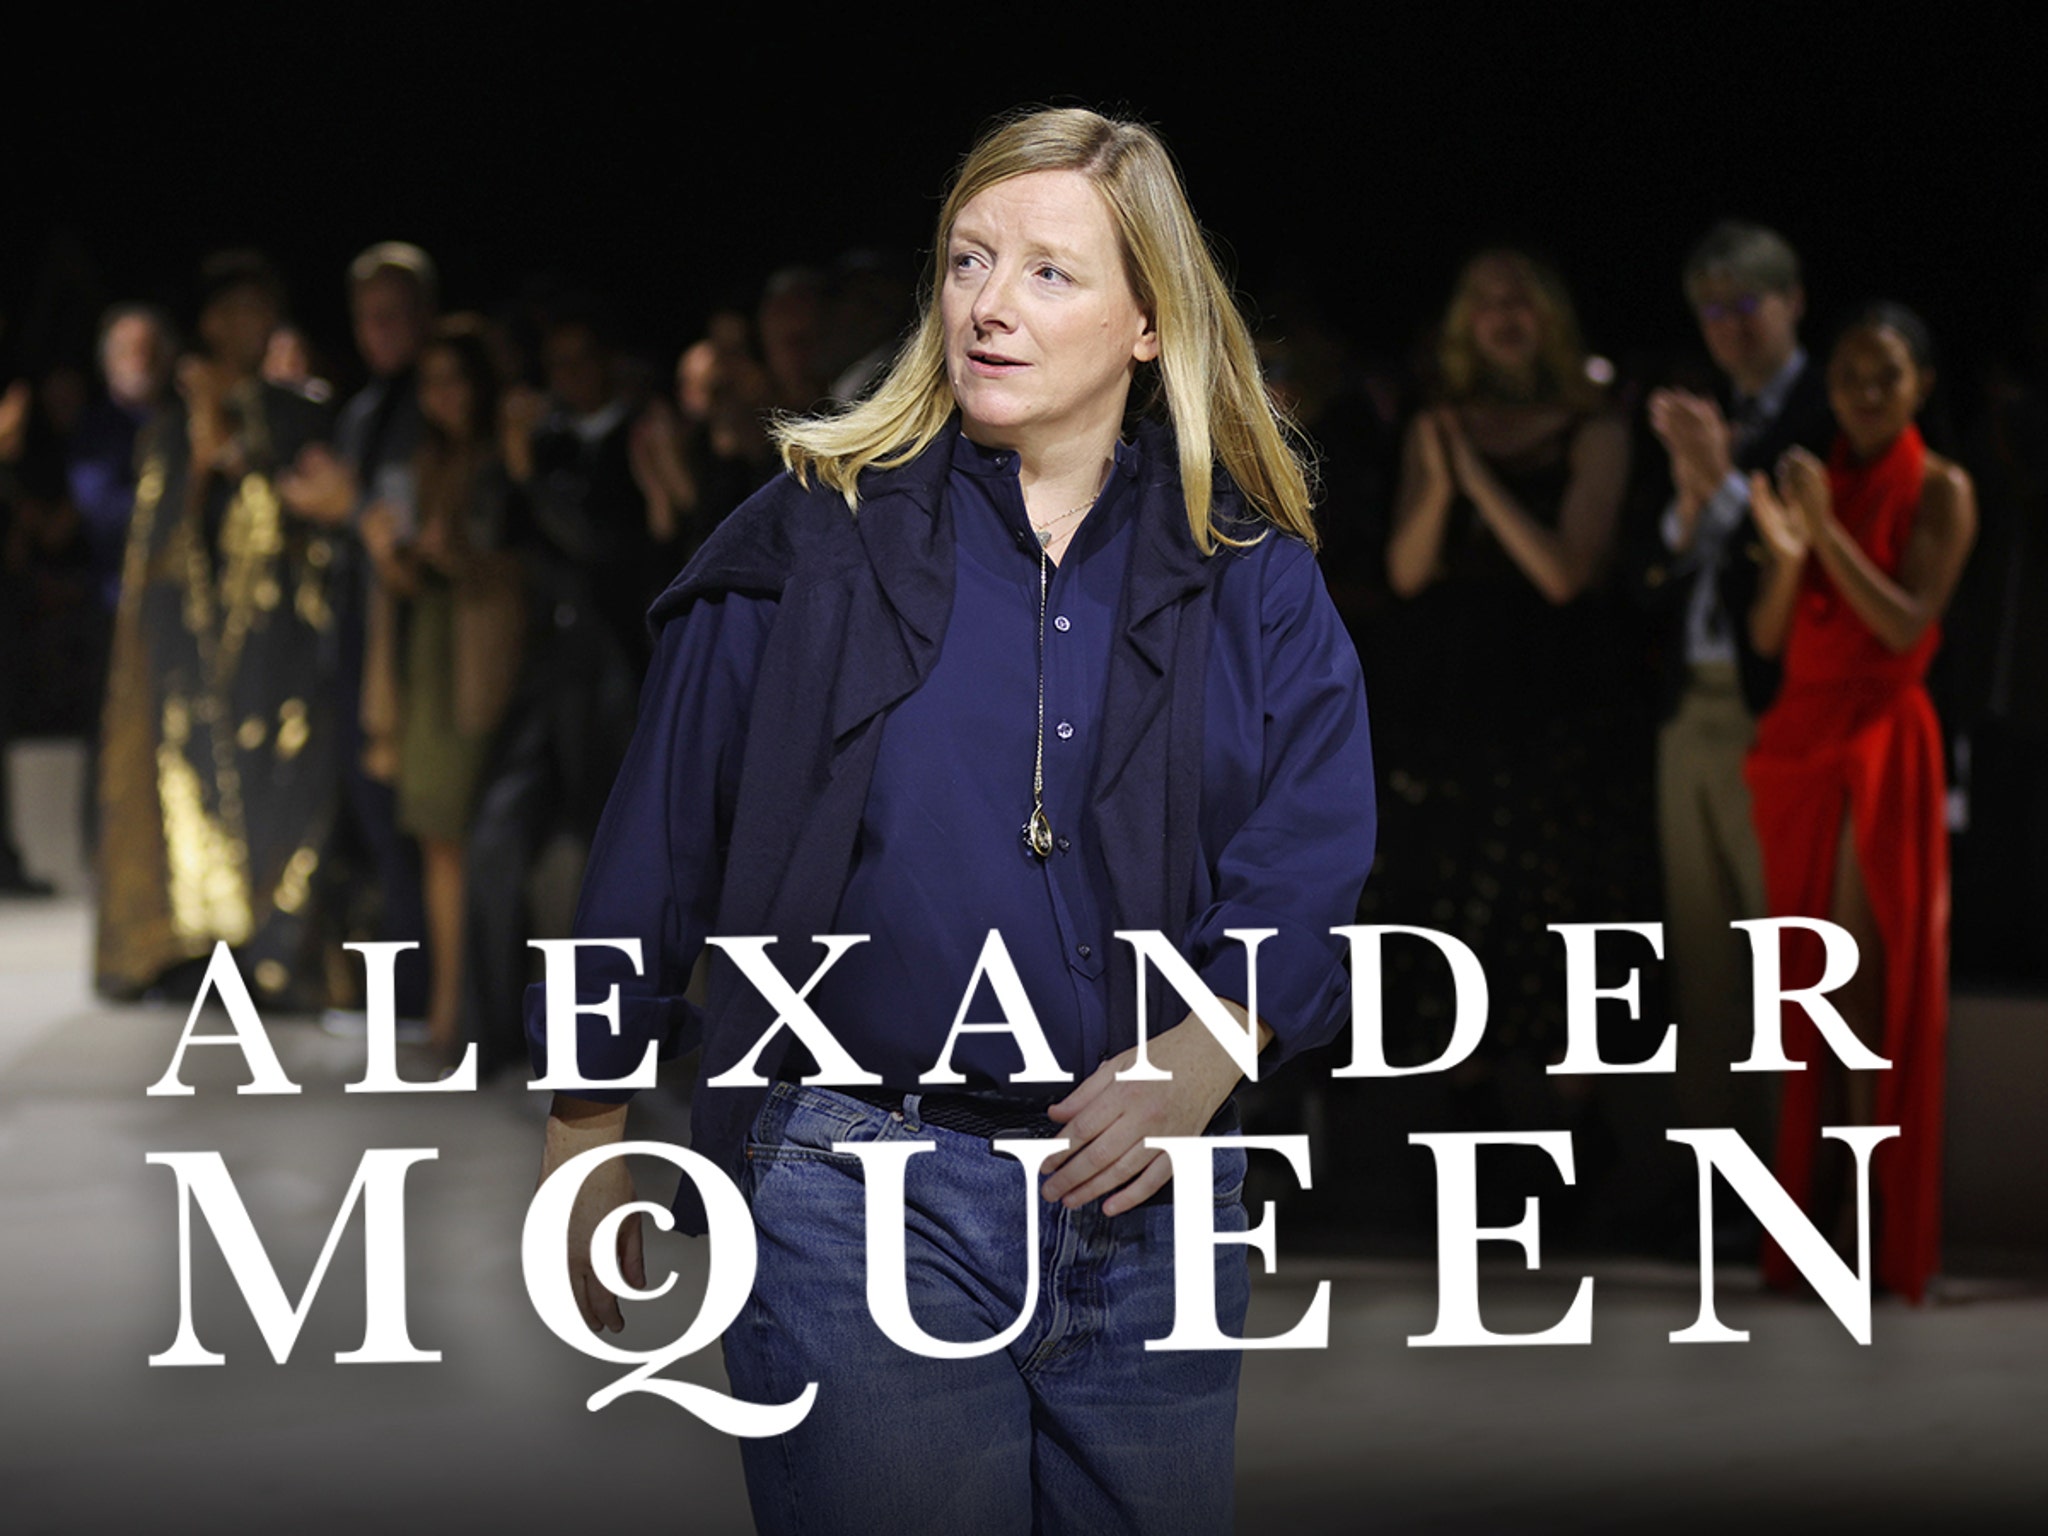 Alexander McQueen's last collection, Fashion